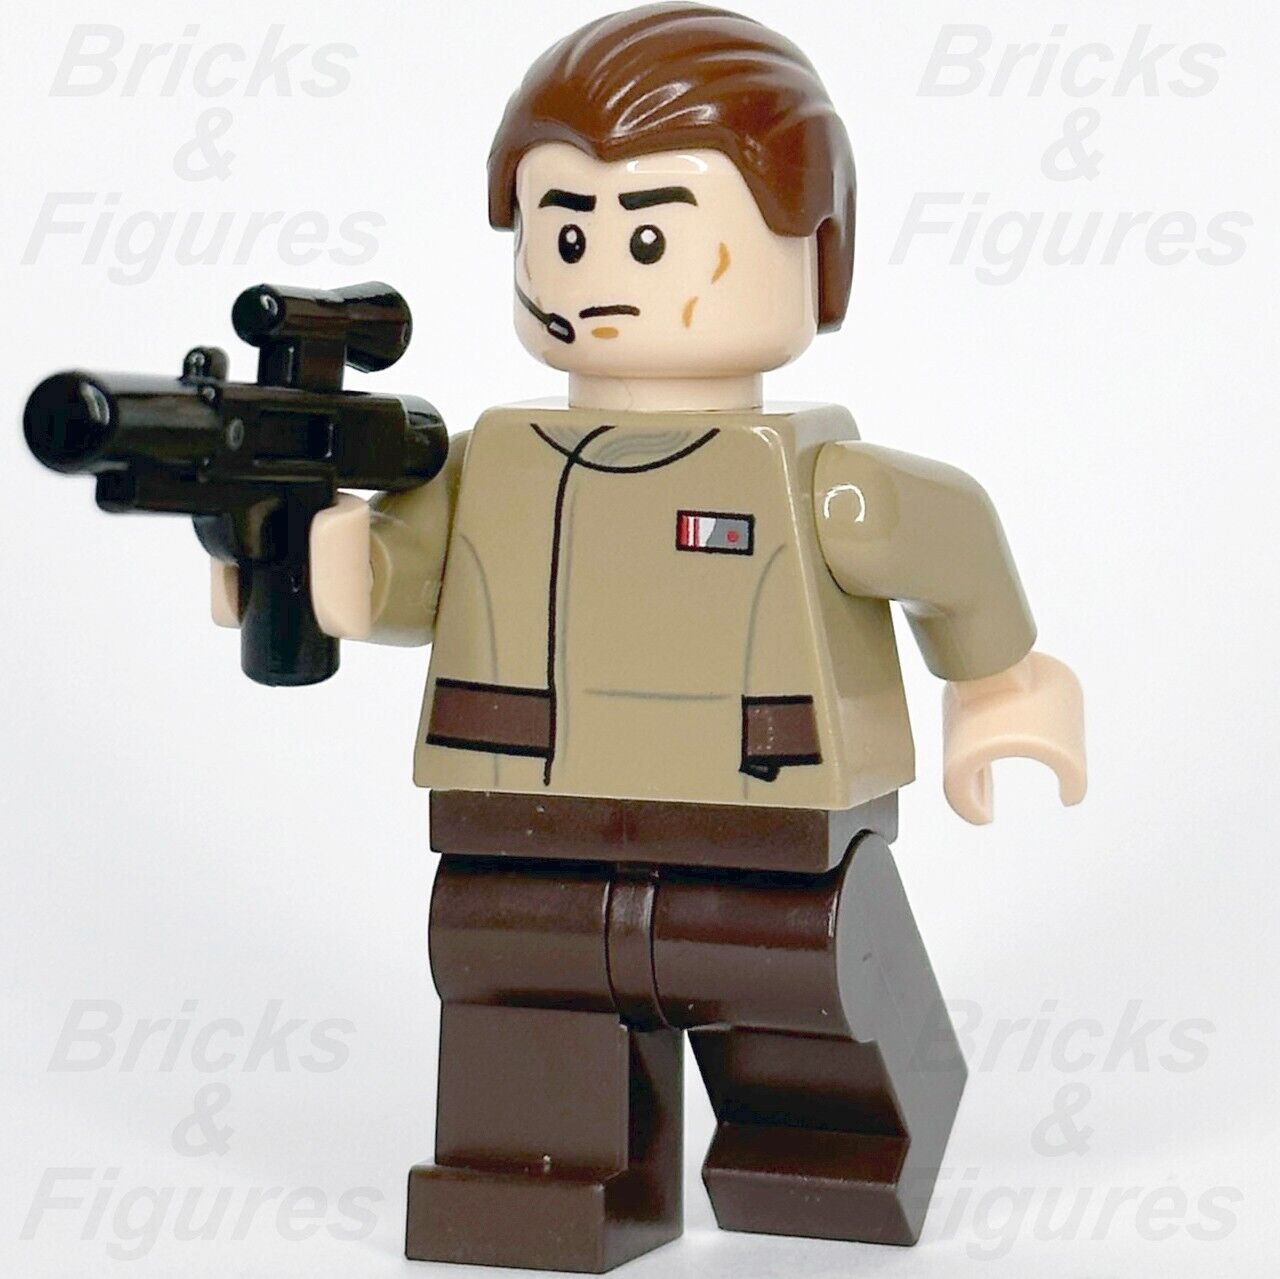 LEGO Star Wars Resistance Officer Minifigure Headset Print Pattern 75131 sw0699